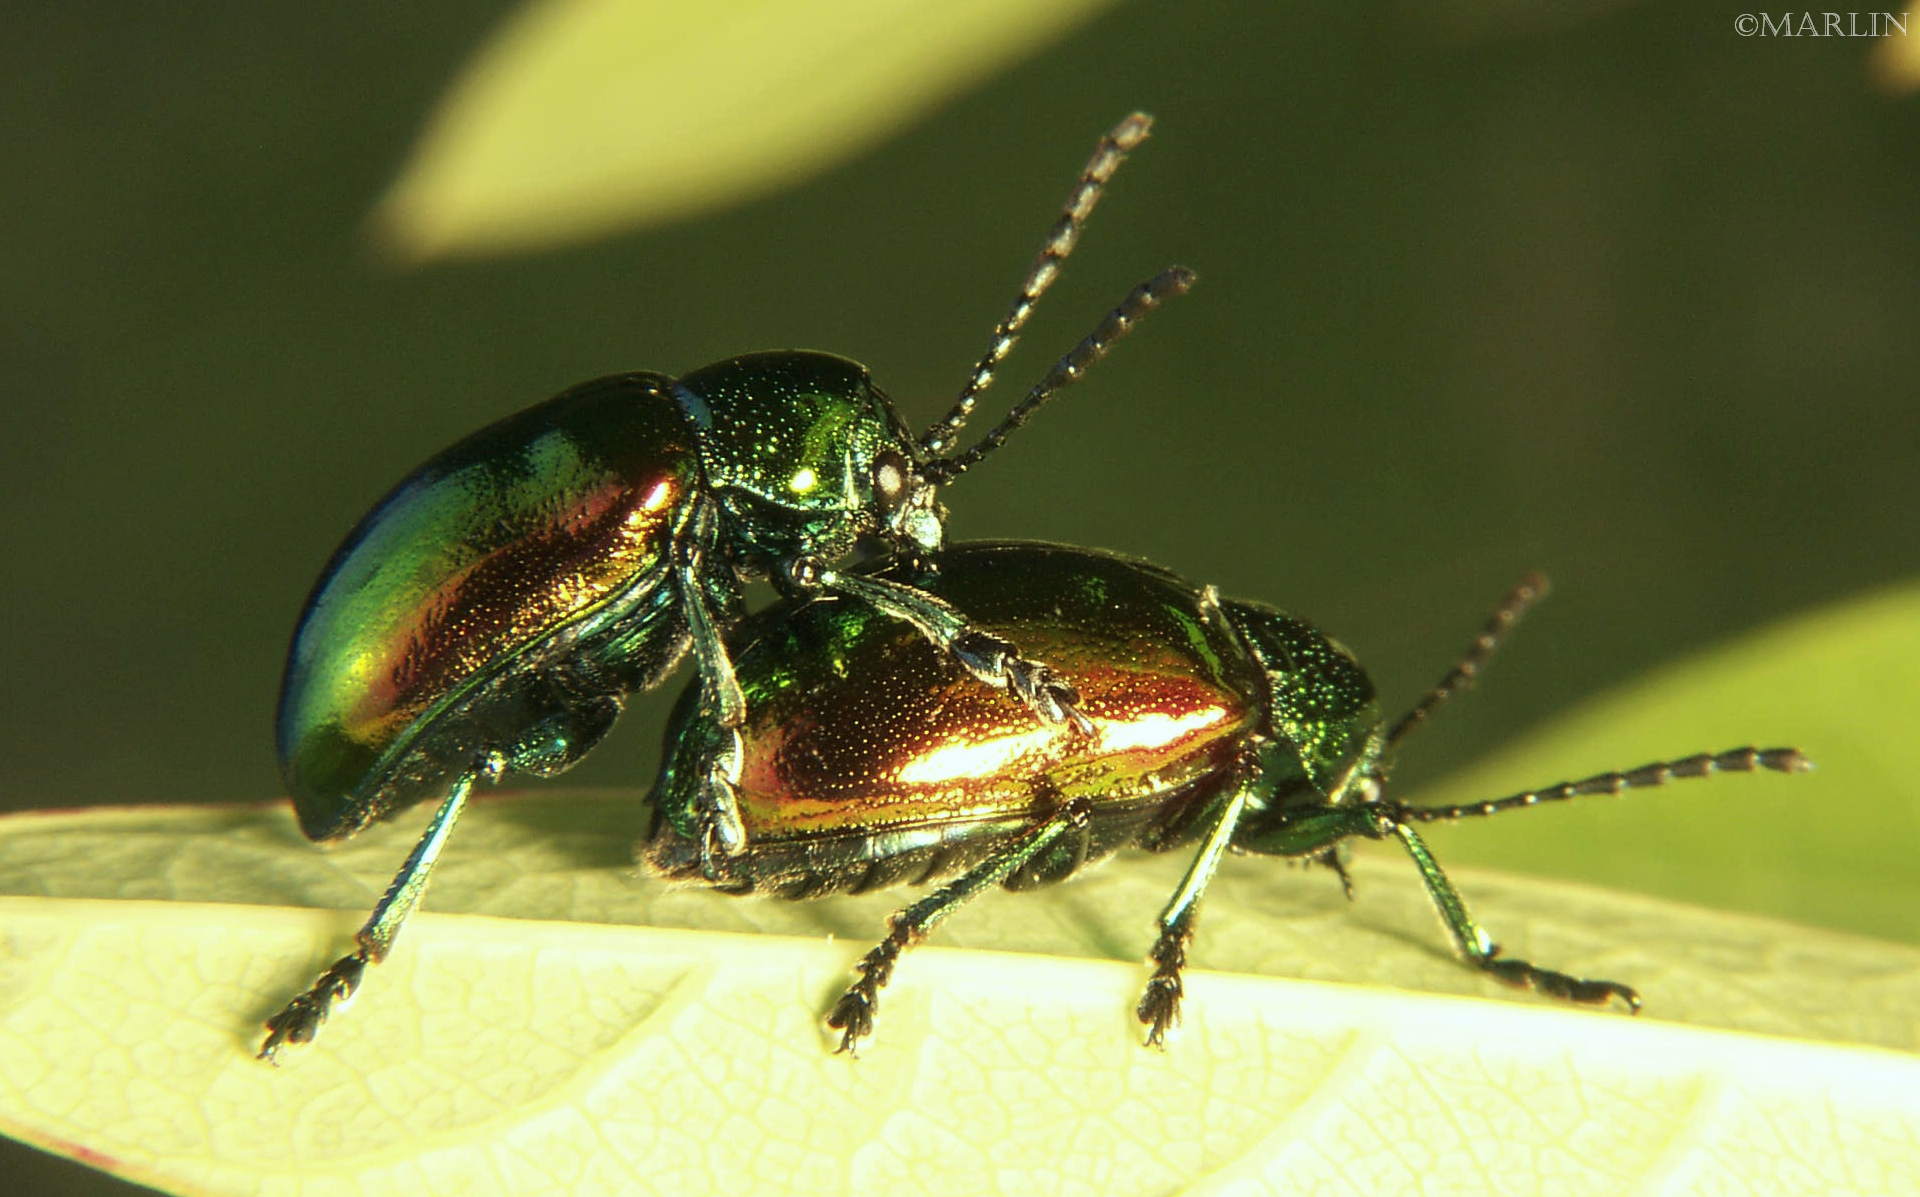 Dogbane Leaf Beetles mating